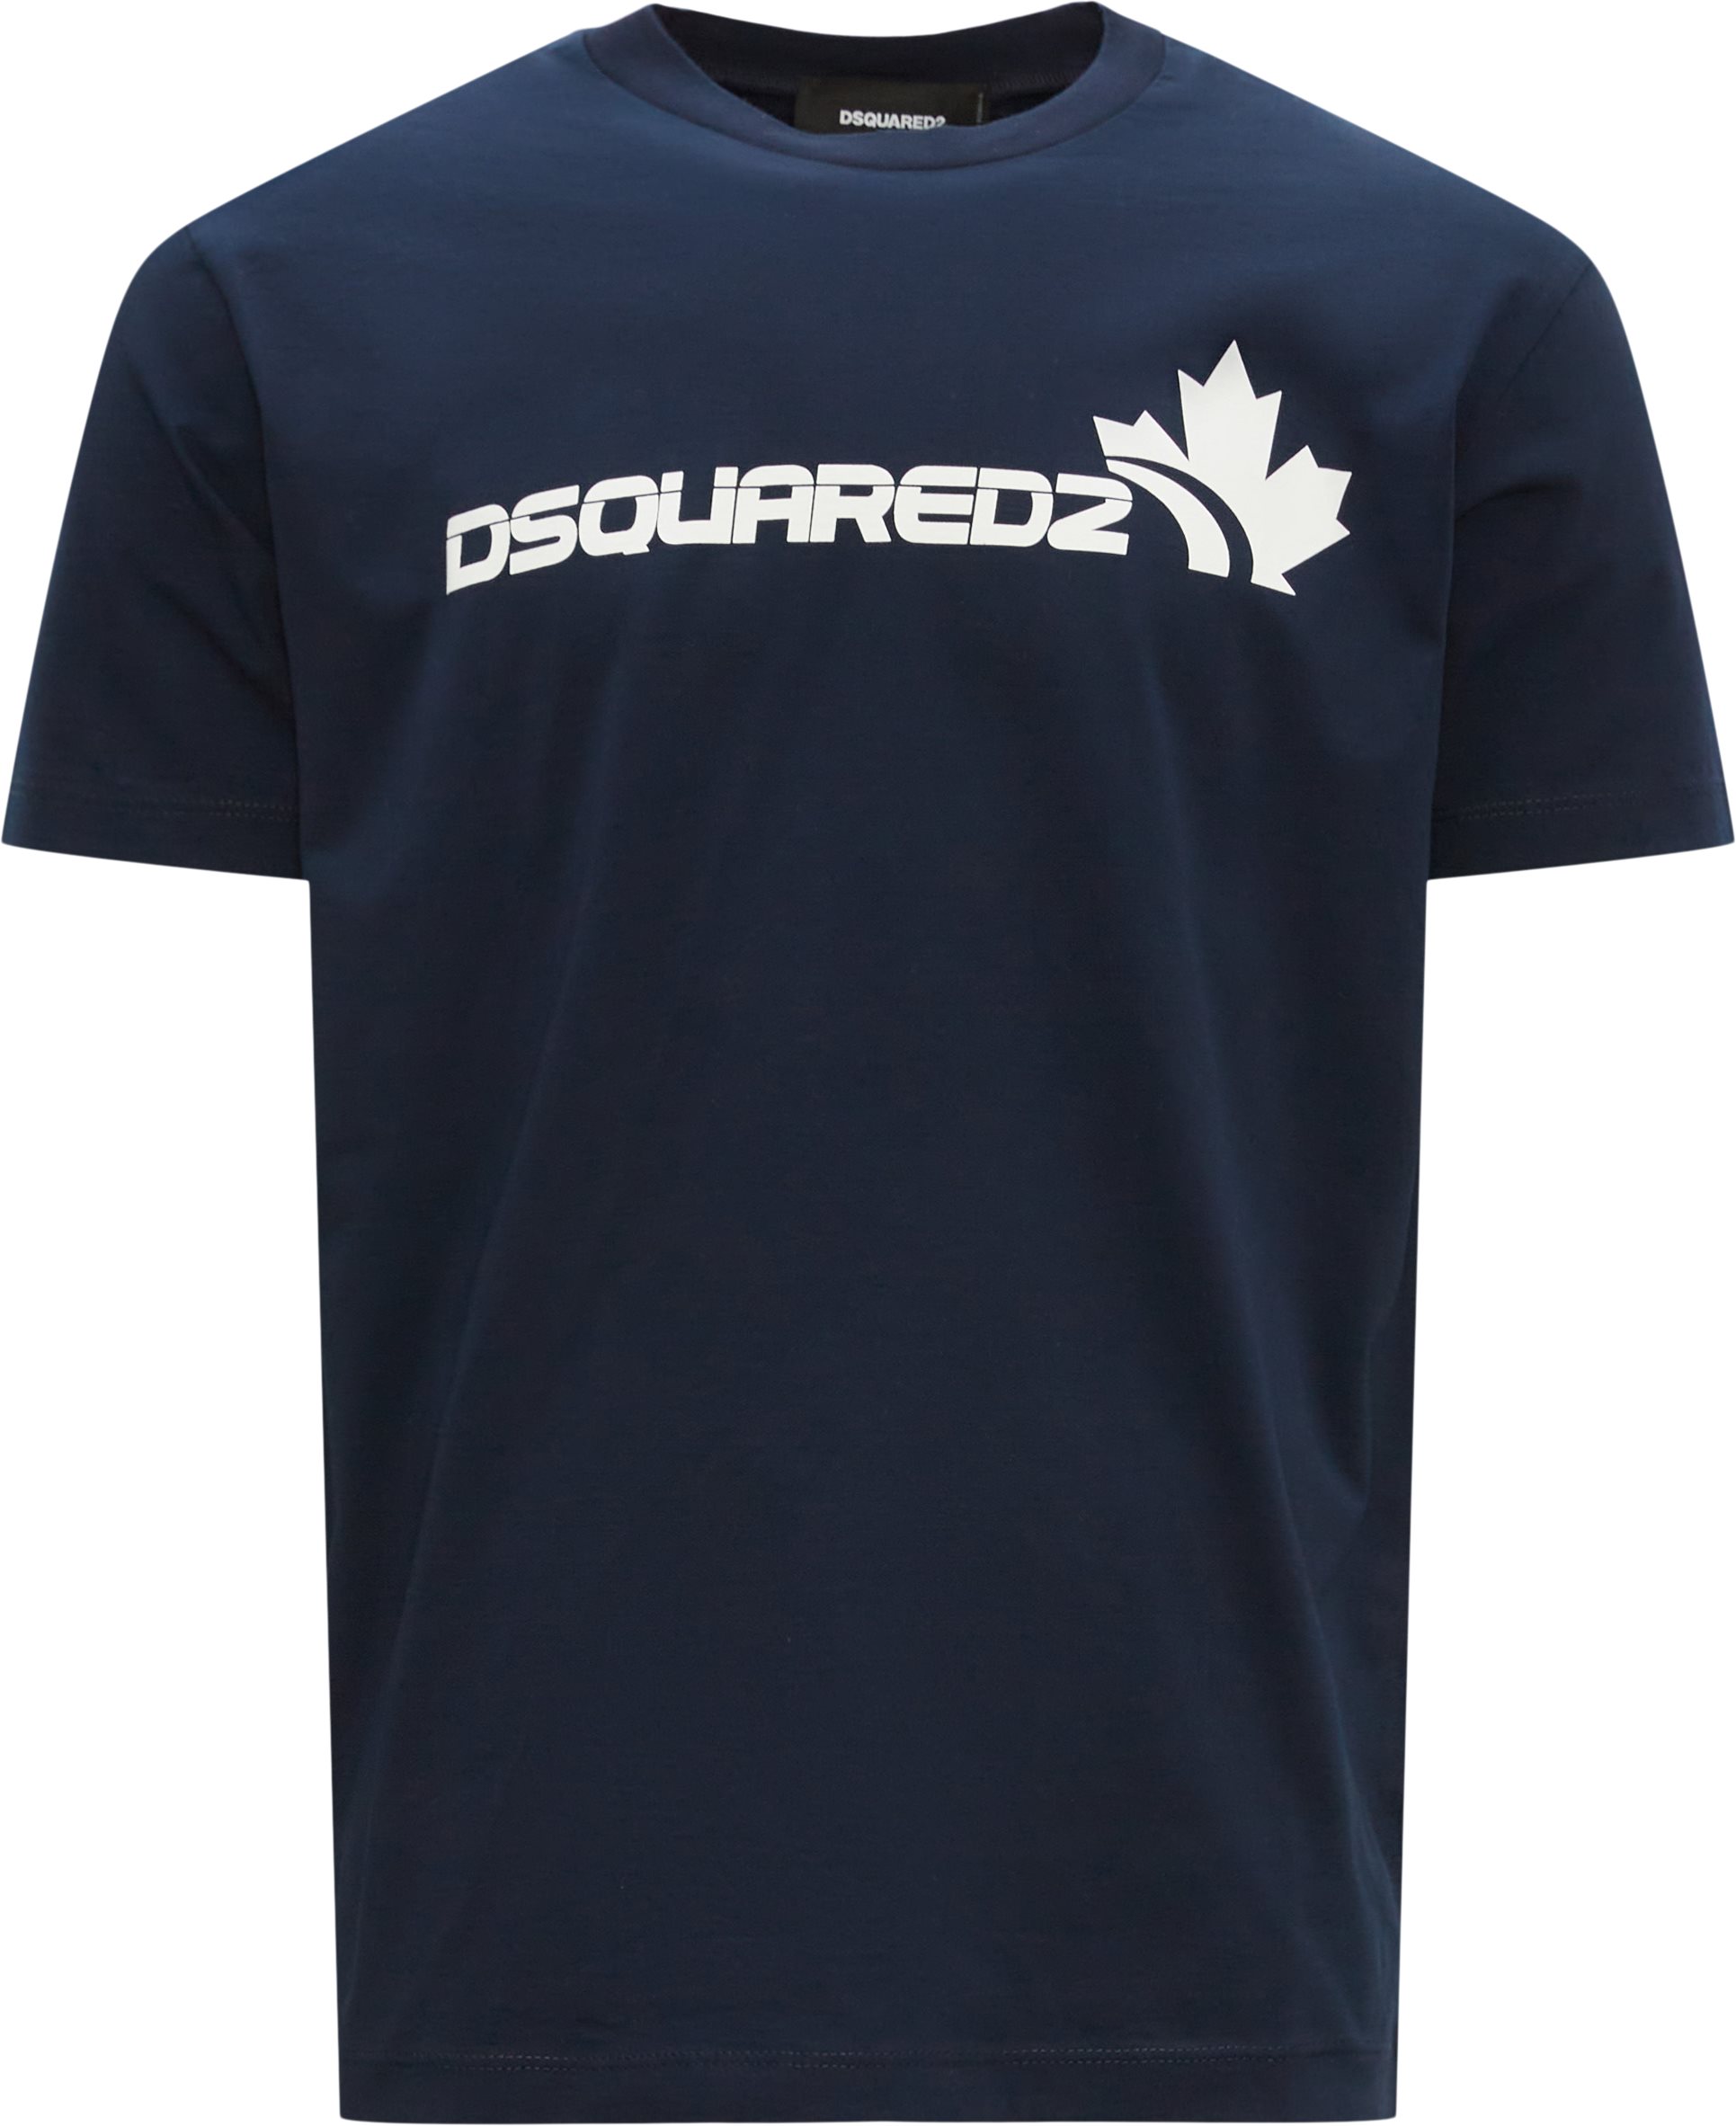 Dsquared2 T-shirts S71GD1278 S23009 Blue